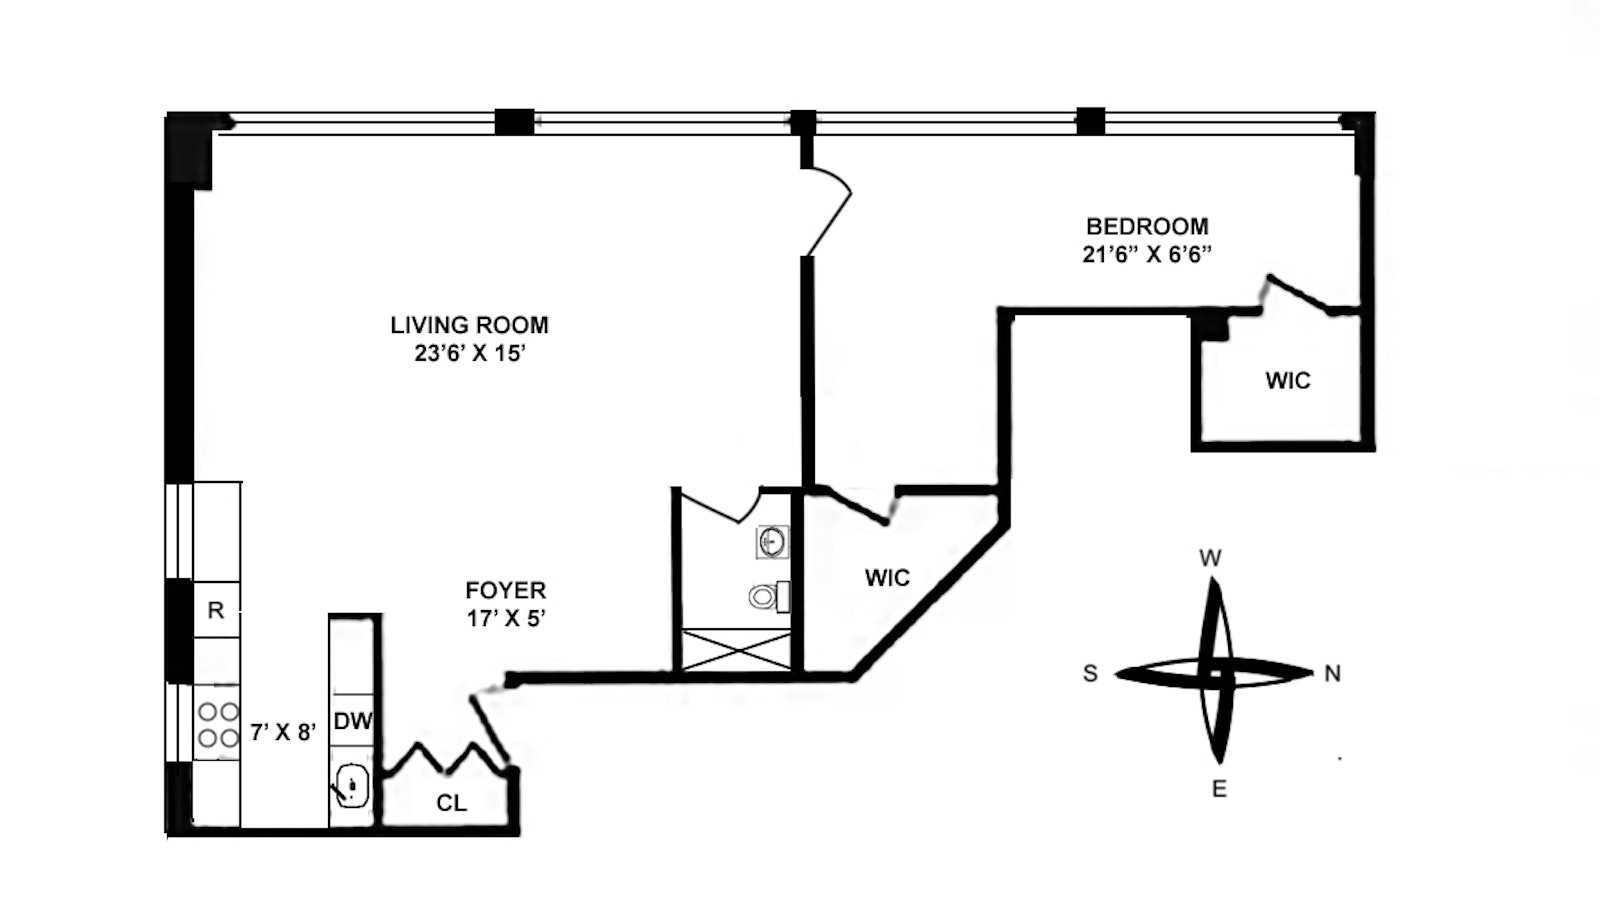 Floorplan for 77 Bleecker Street, 1210